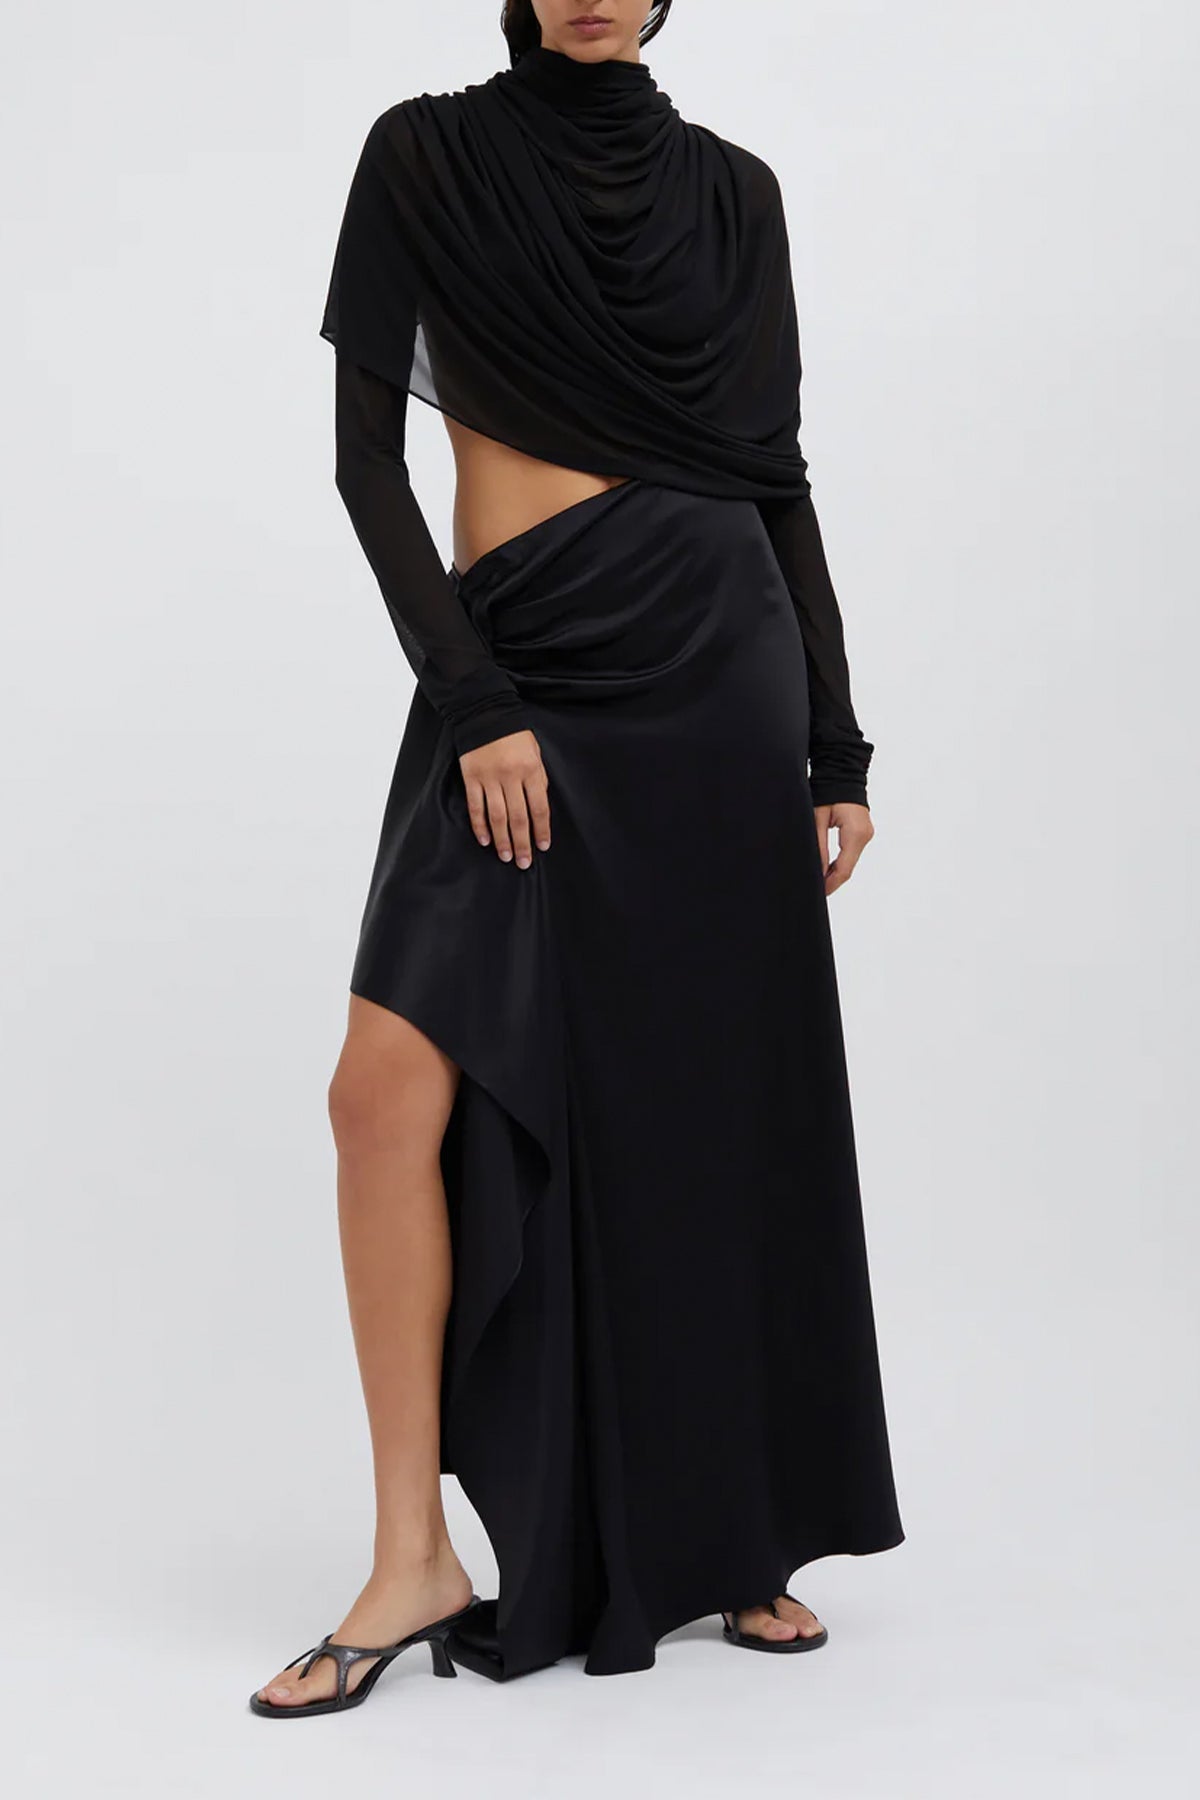 Cusco Silk Elongated Drape Skirt in Black - shop-olivia.com